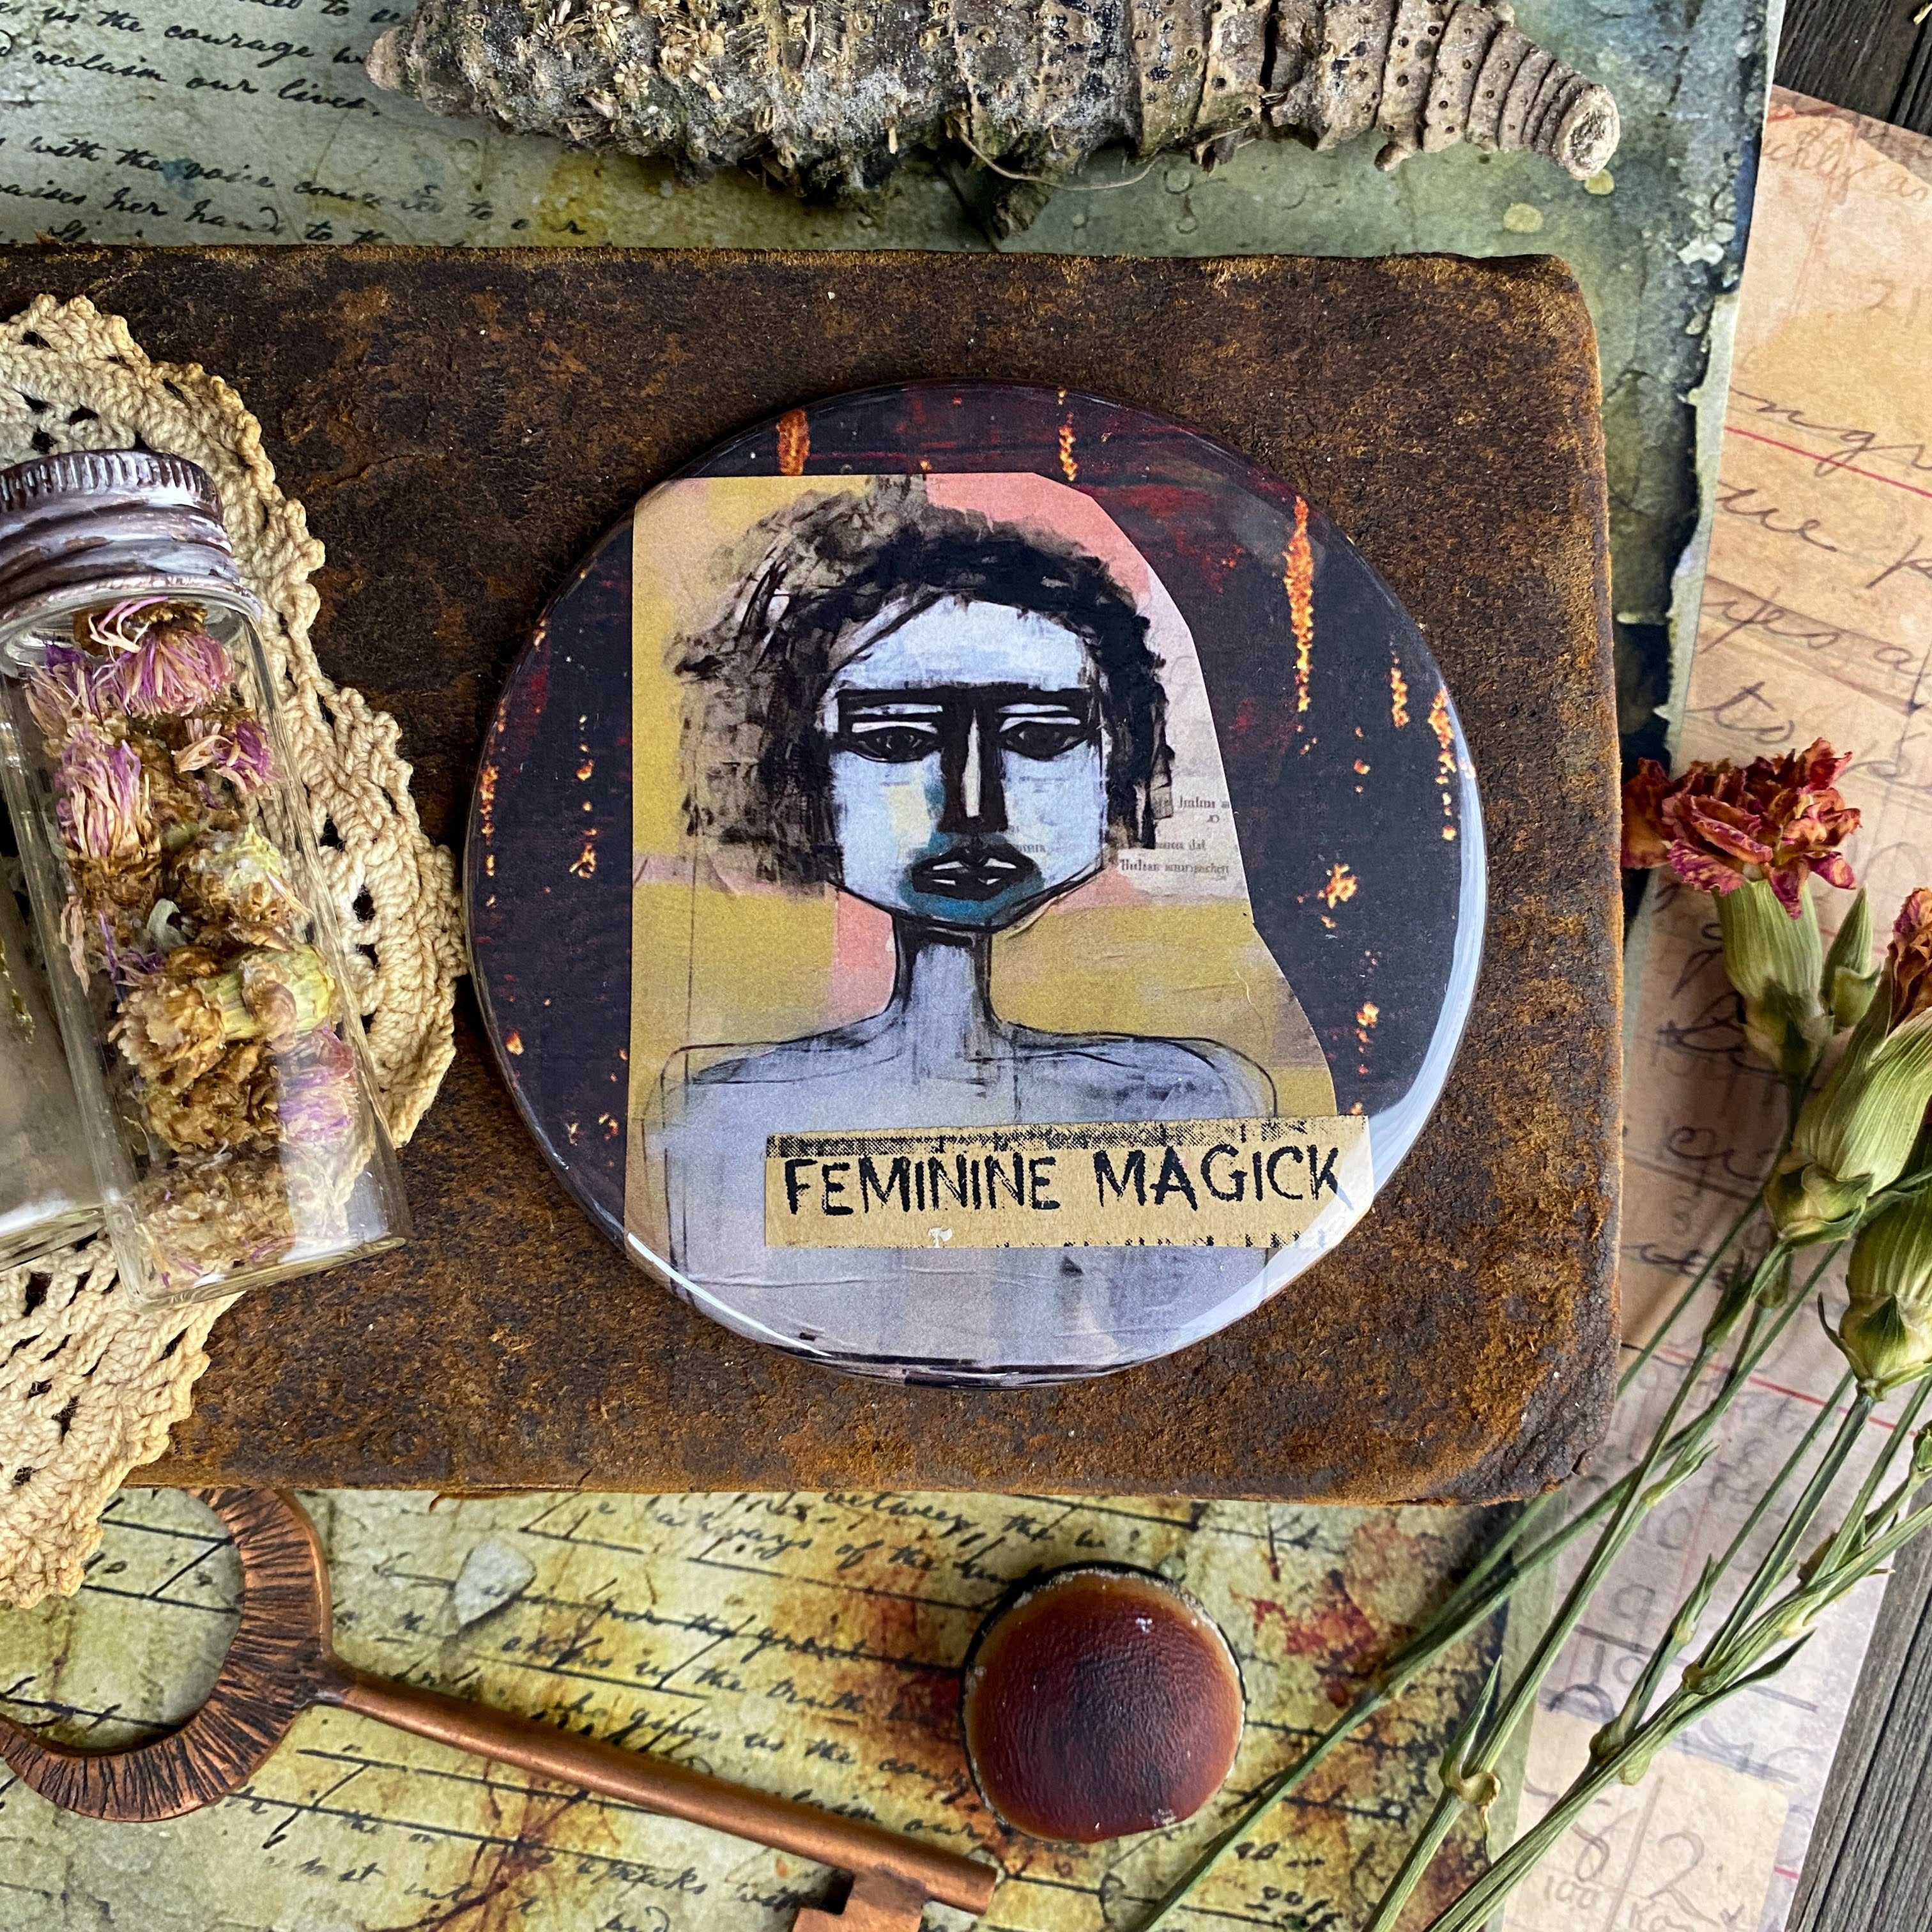 FEMININE MAGICK - Hand Pressed Pocket Mirror with Original Collage Art